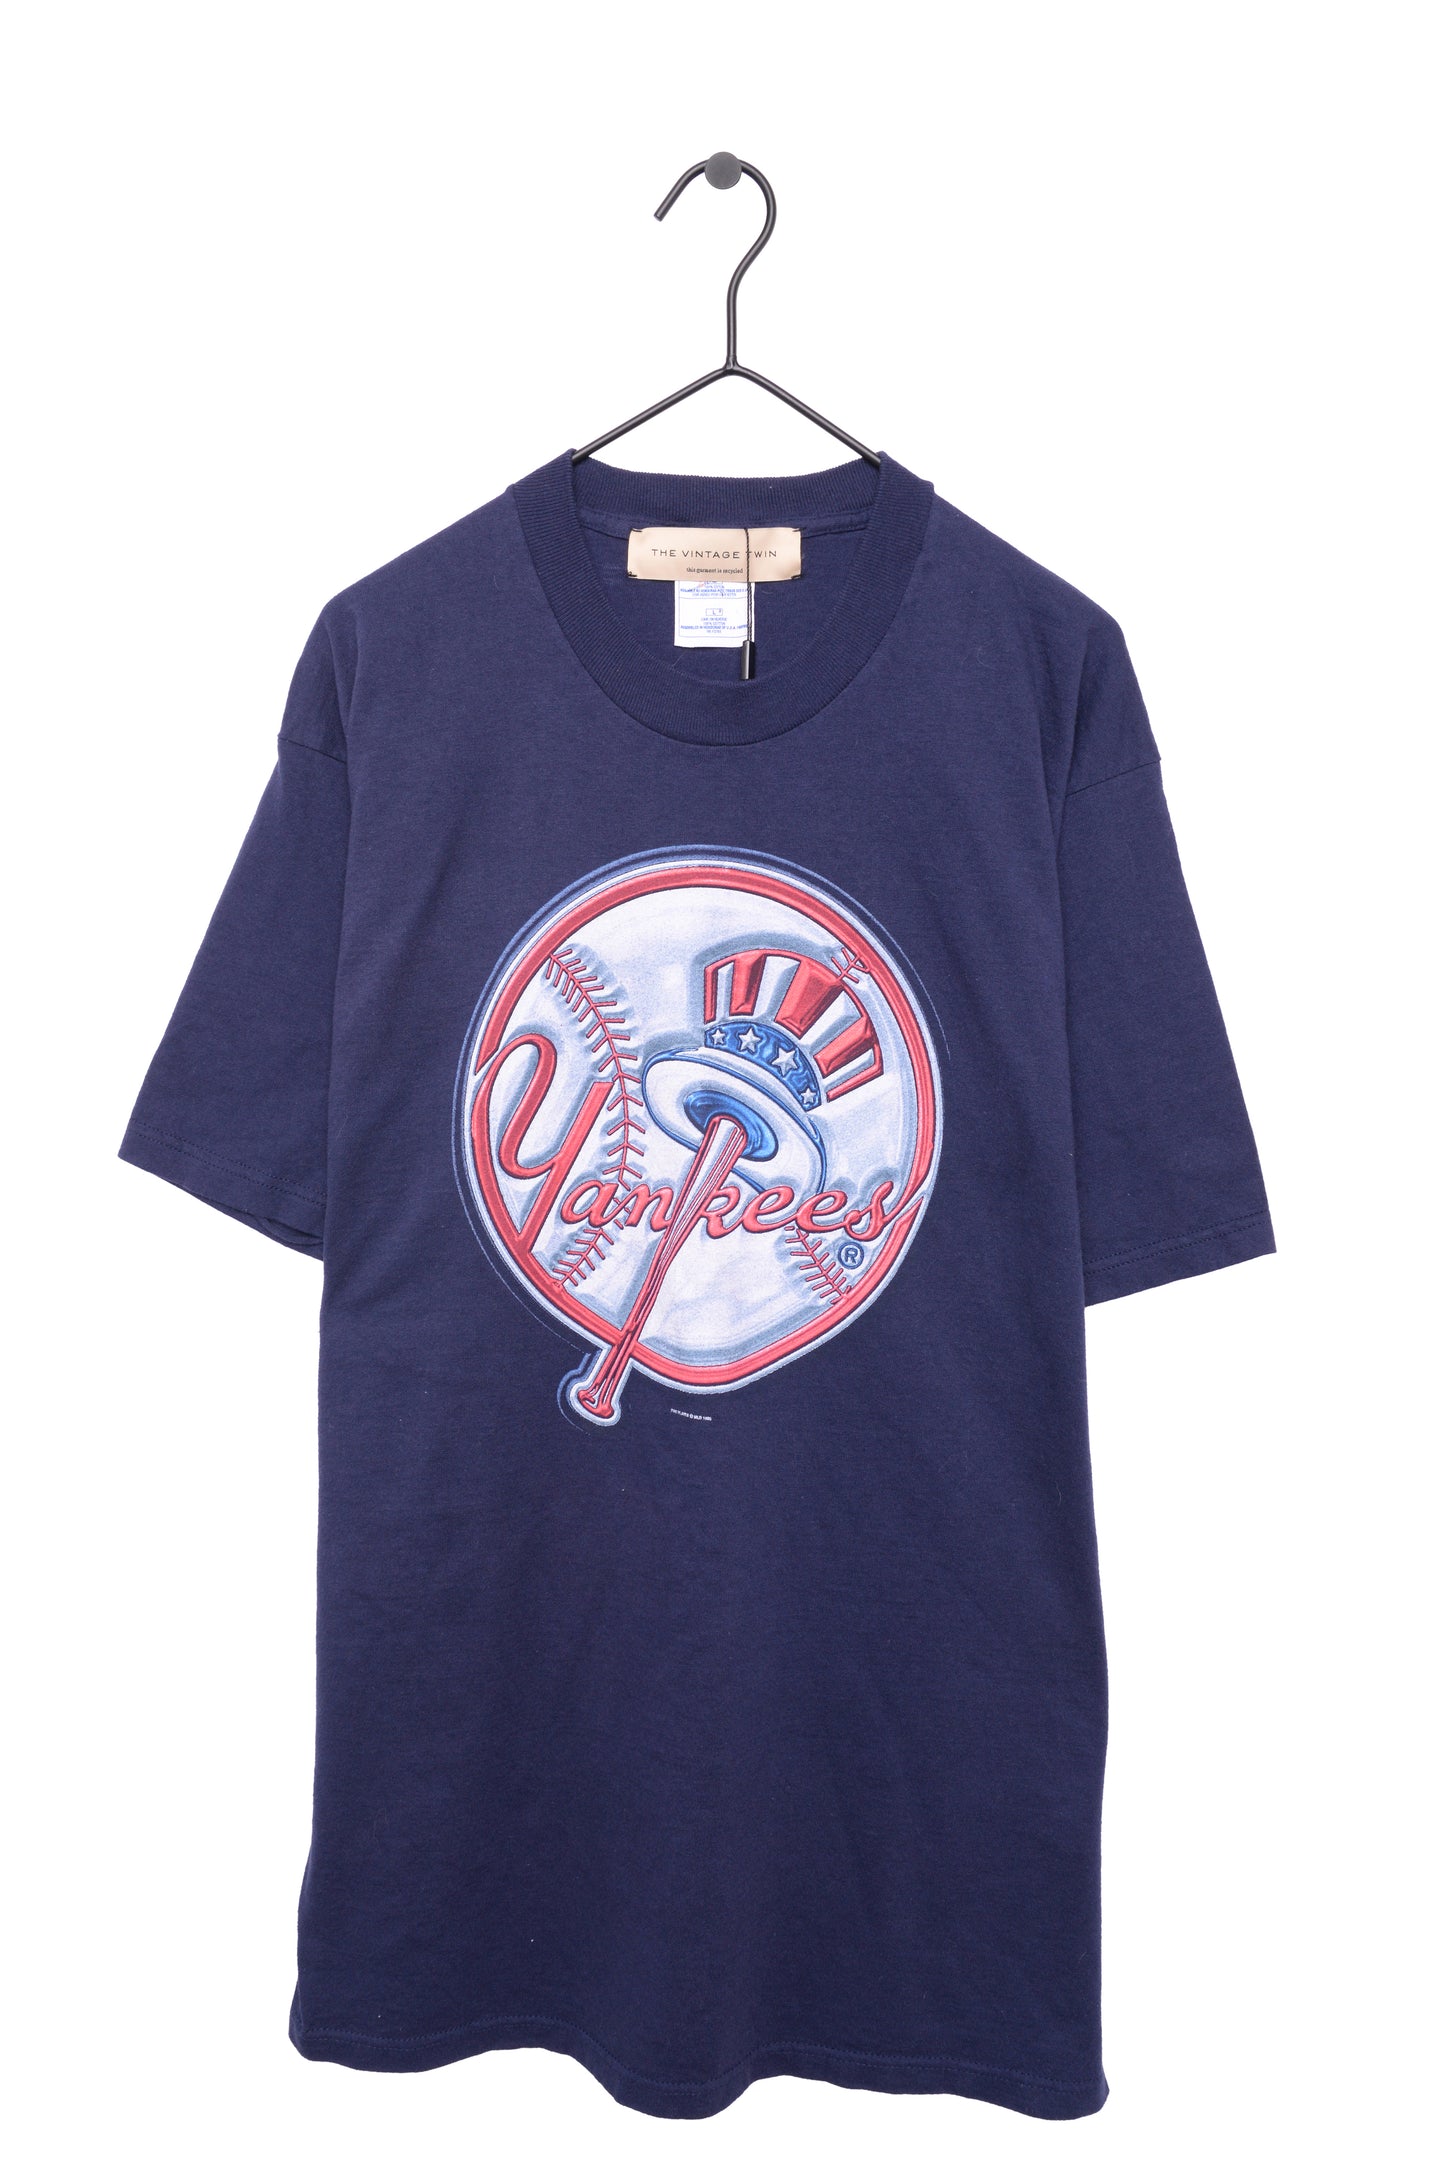 New York Yankees Shirts, Yankees Tees, Yankees T-Shirts